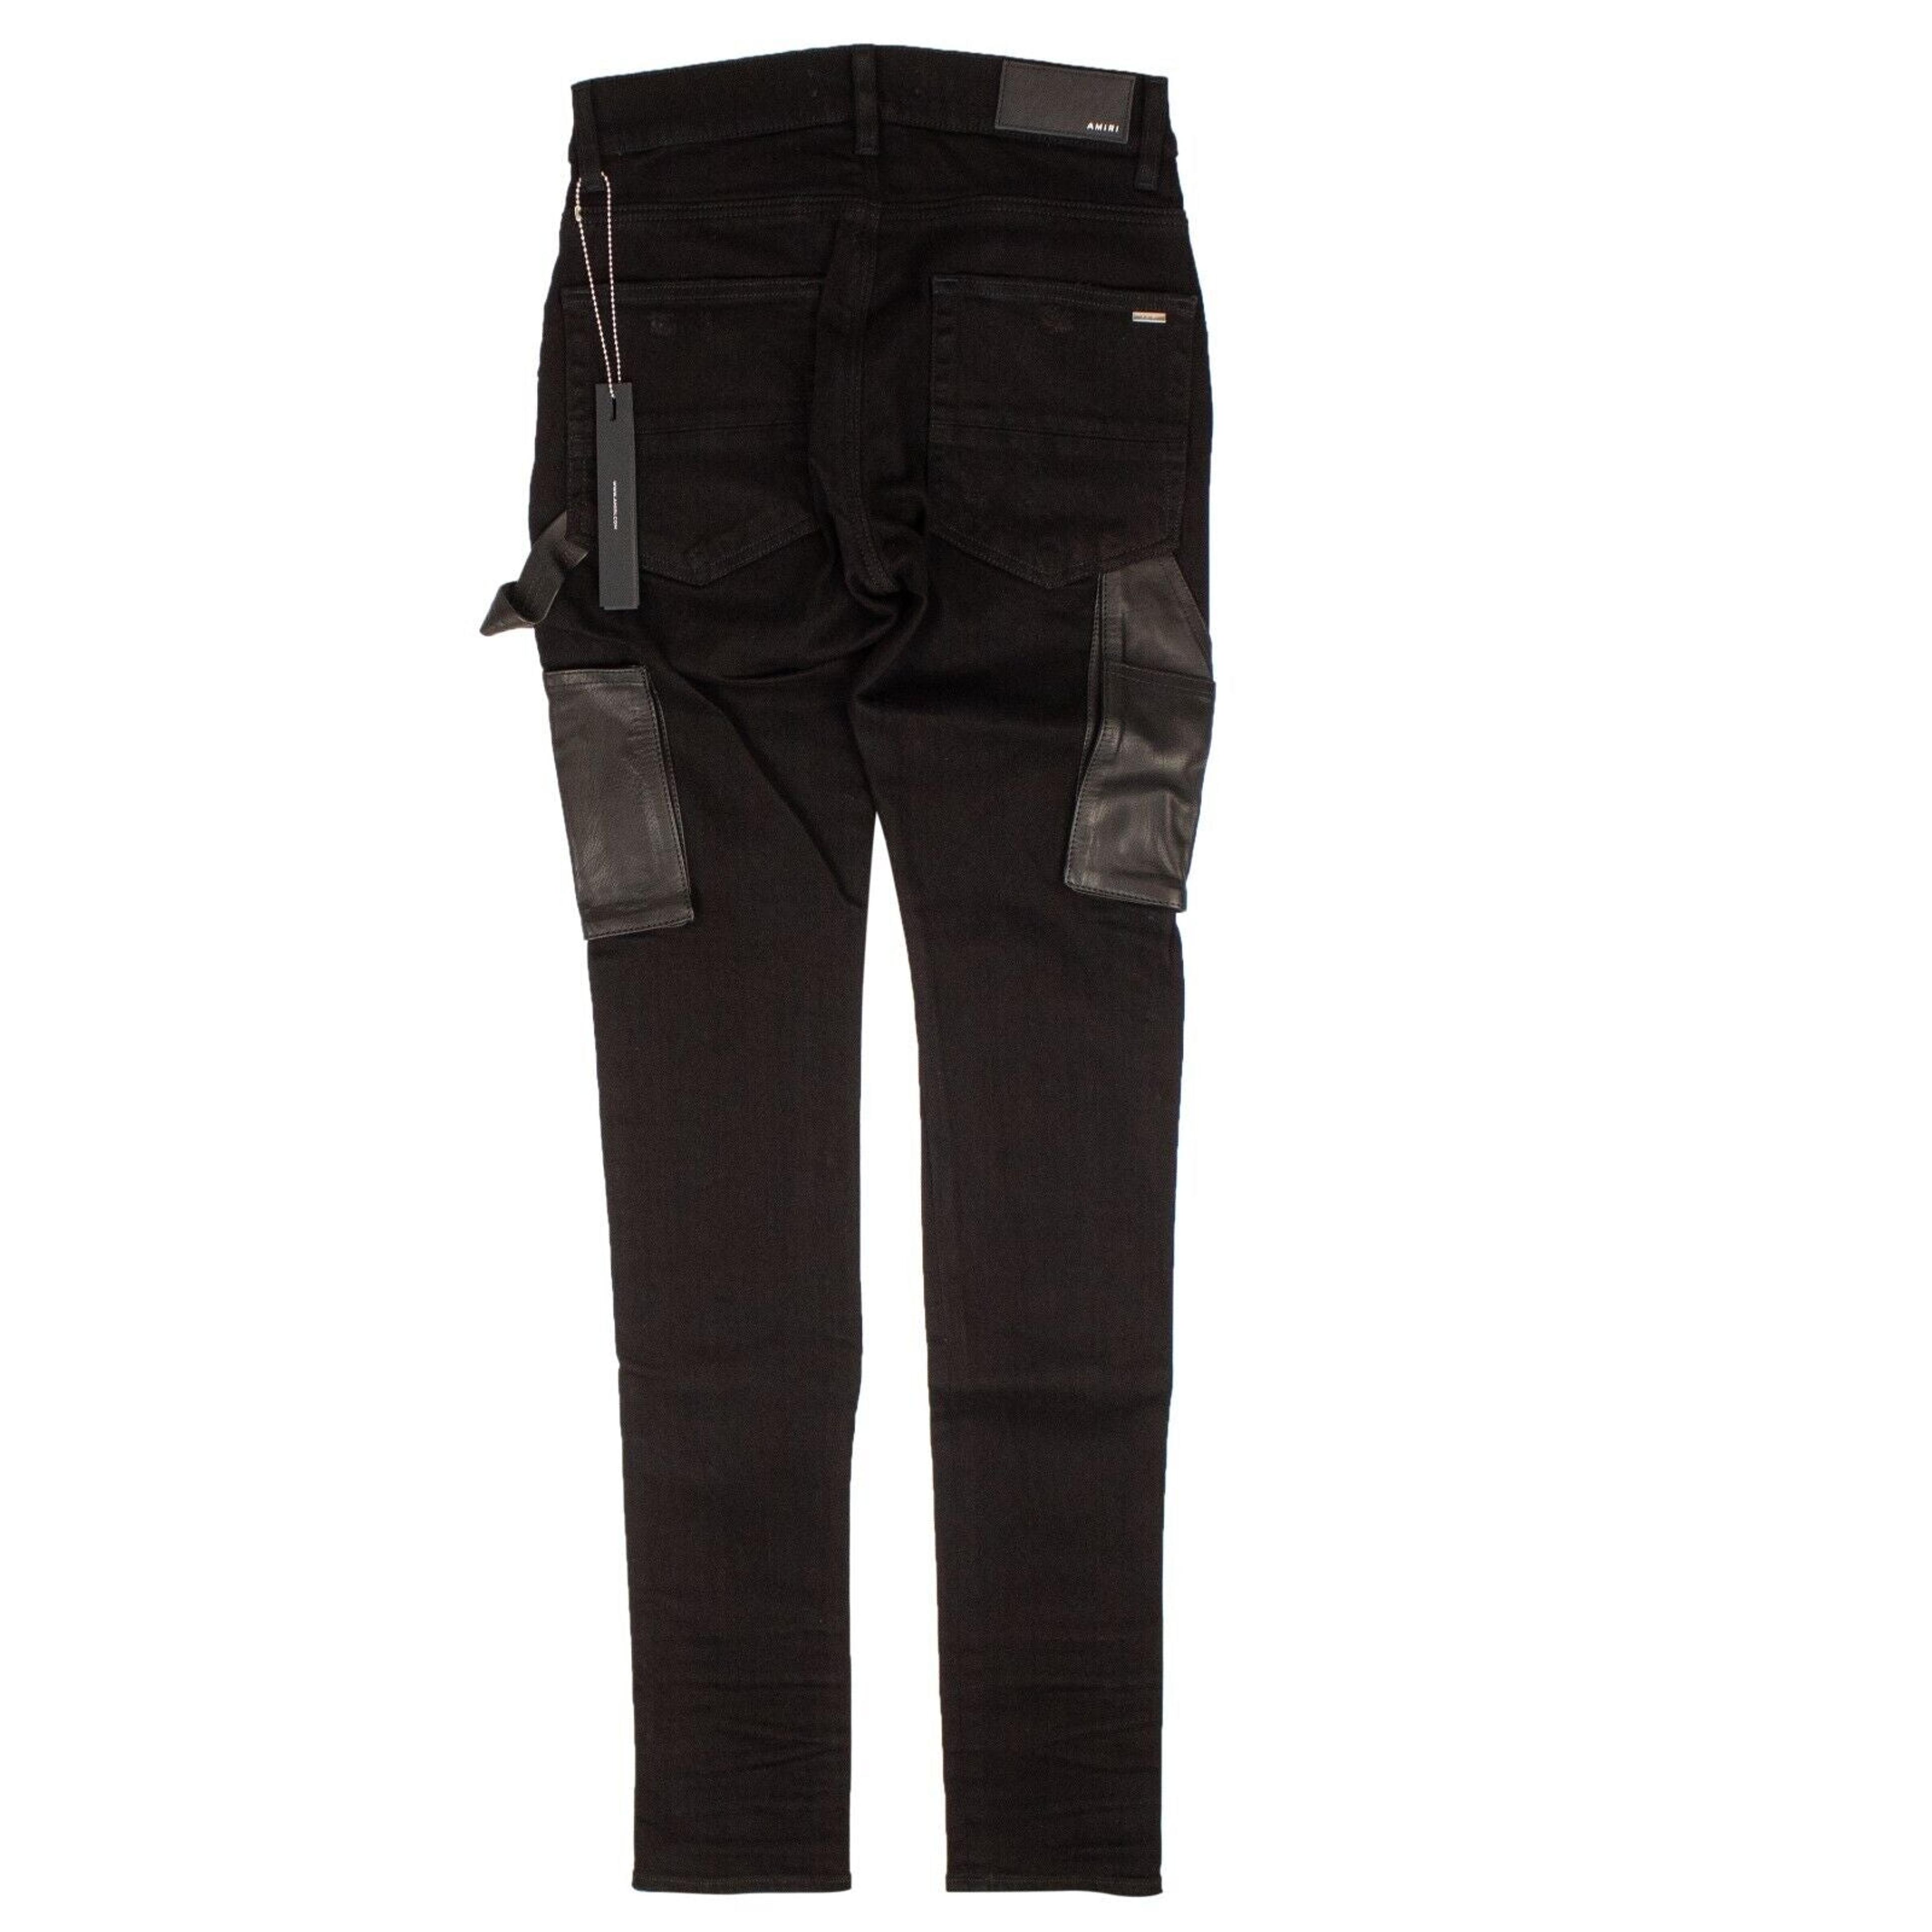 Alternate View 2 of Black Denim Leather Workman Pants